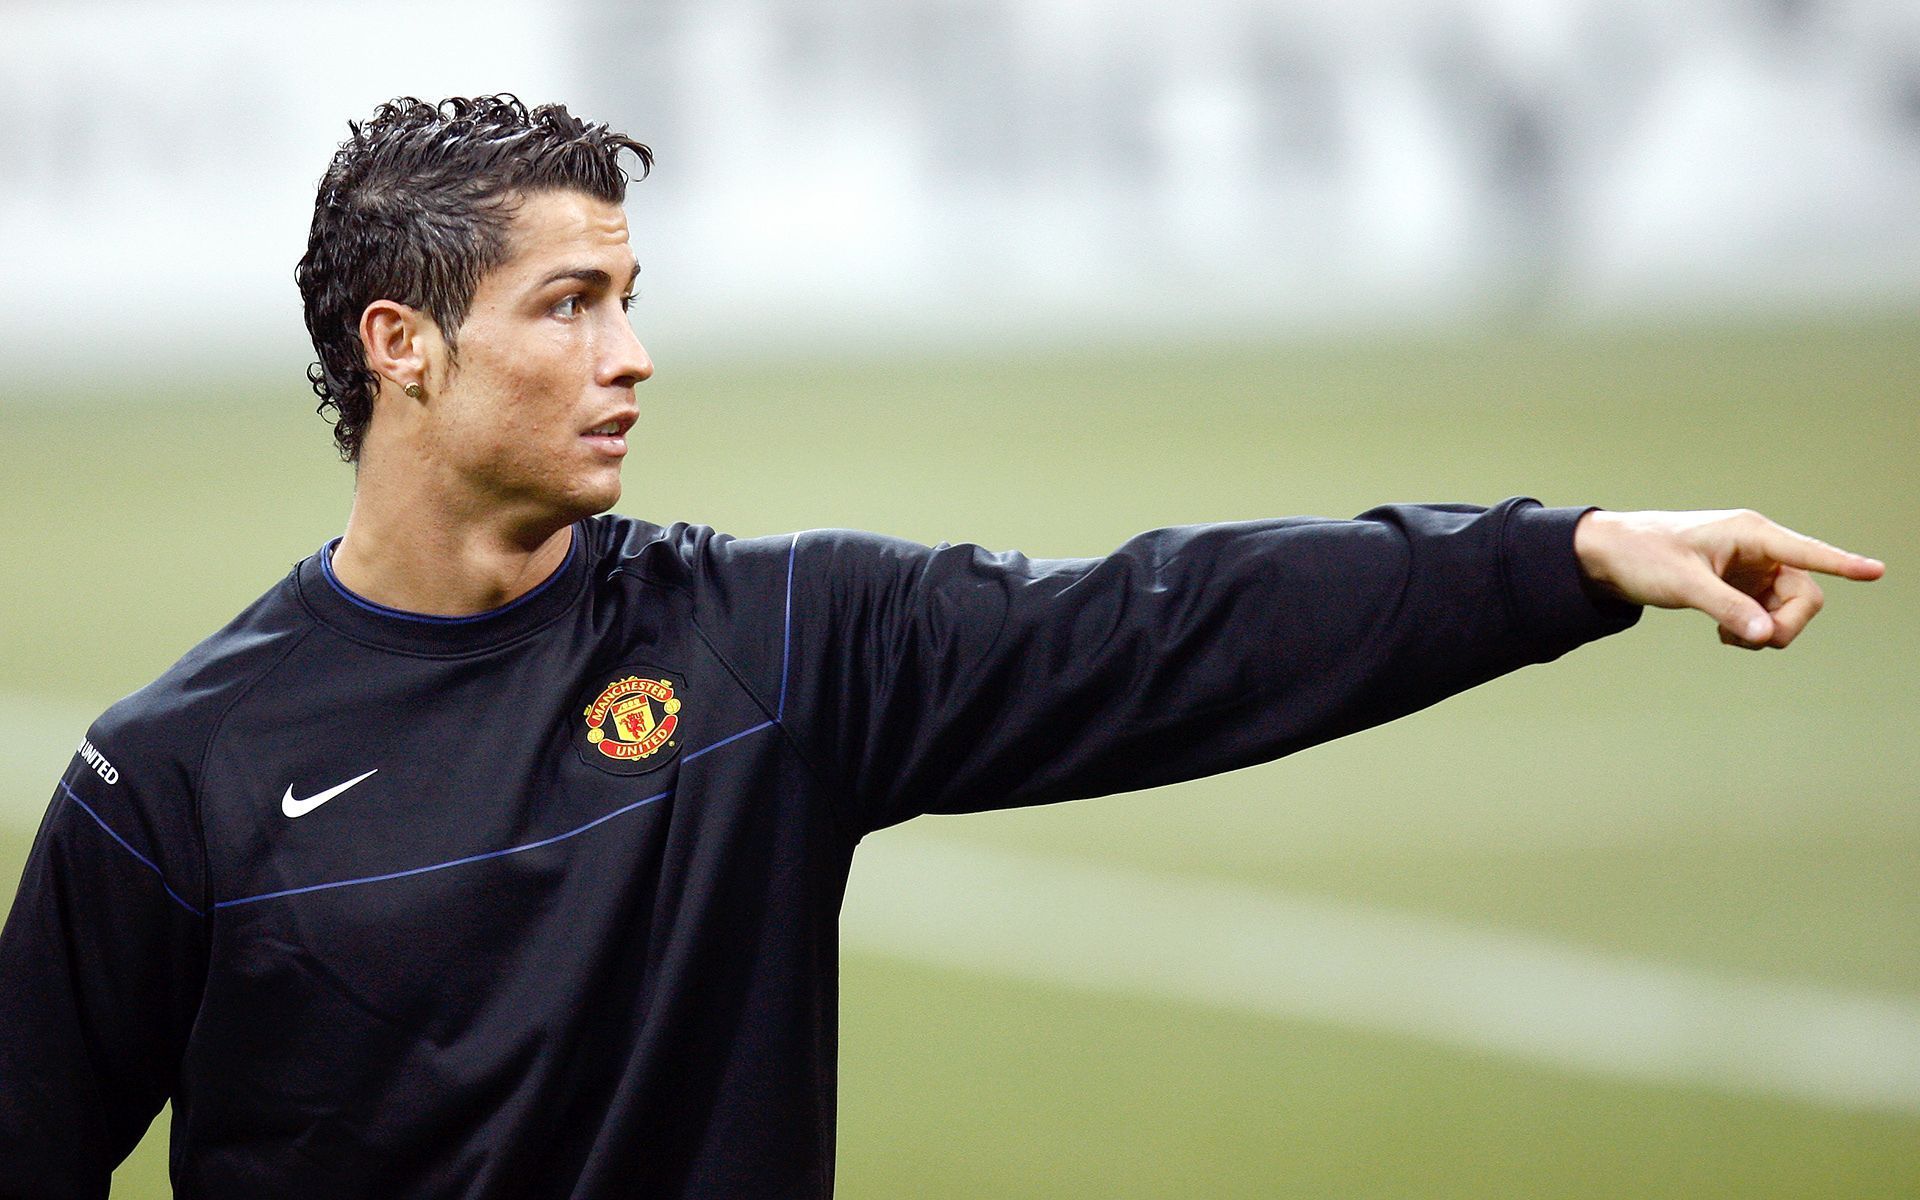 Download Cristiano Ronaldo Hd Free Wallpaper | Full HD Wallpapers